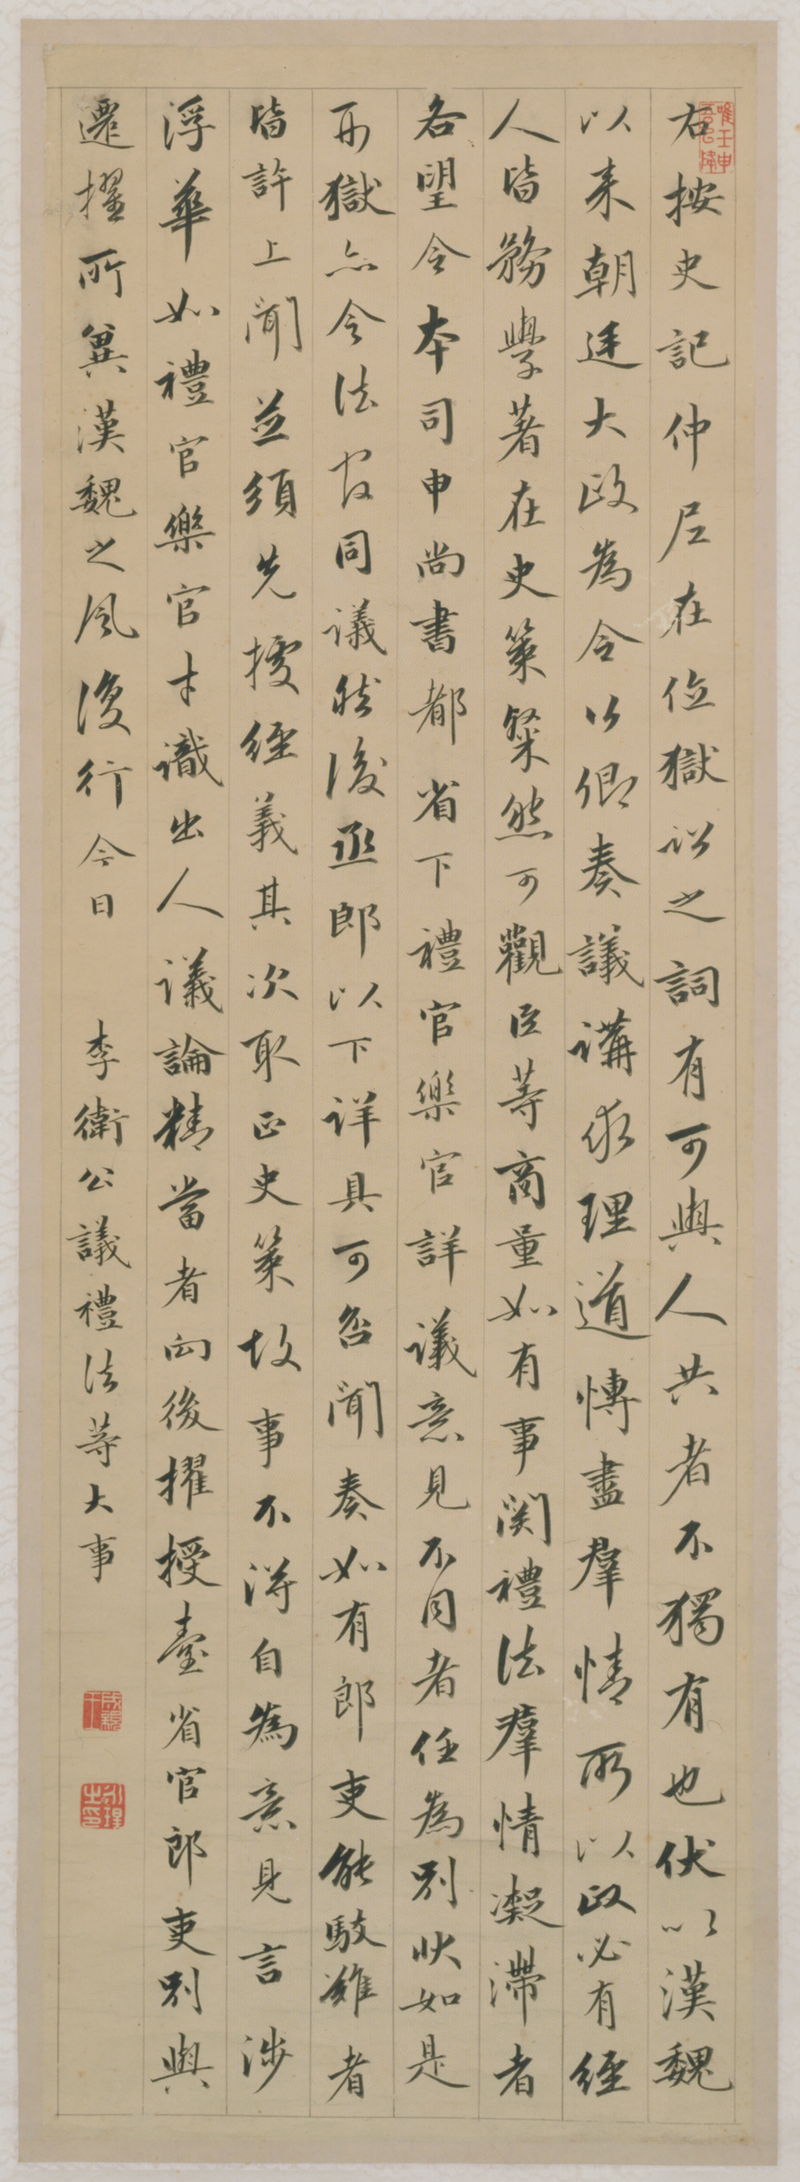 File:清永瑆行楷书诗文四条屏1.png - Wikimedia Commons